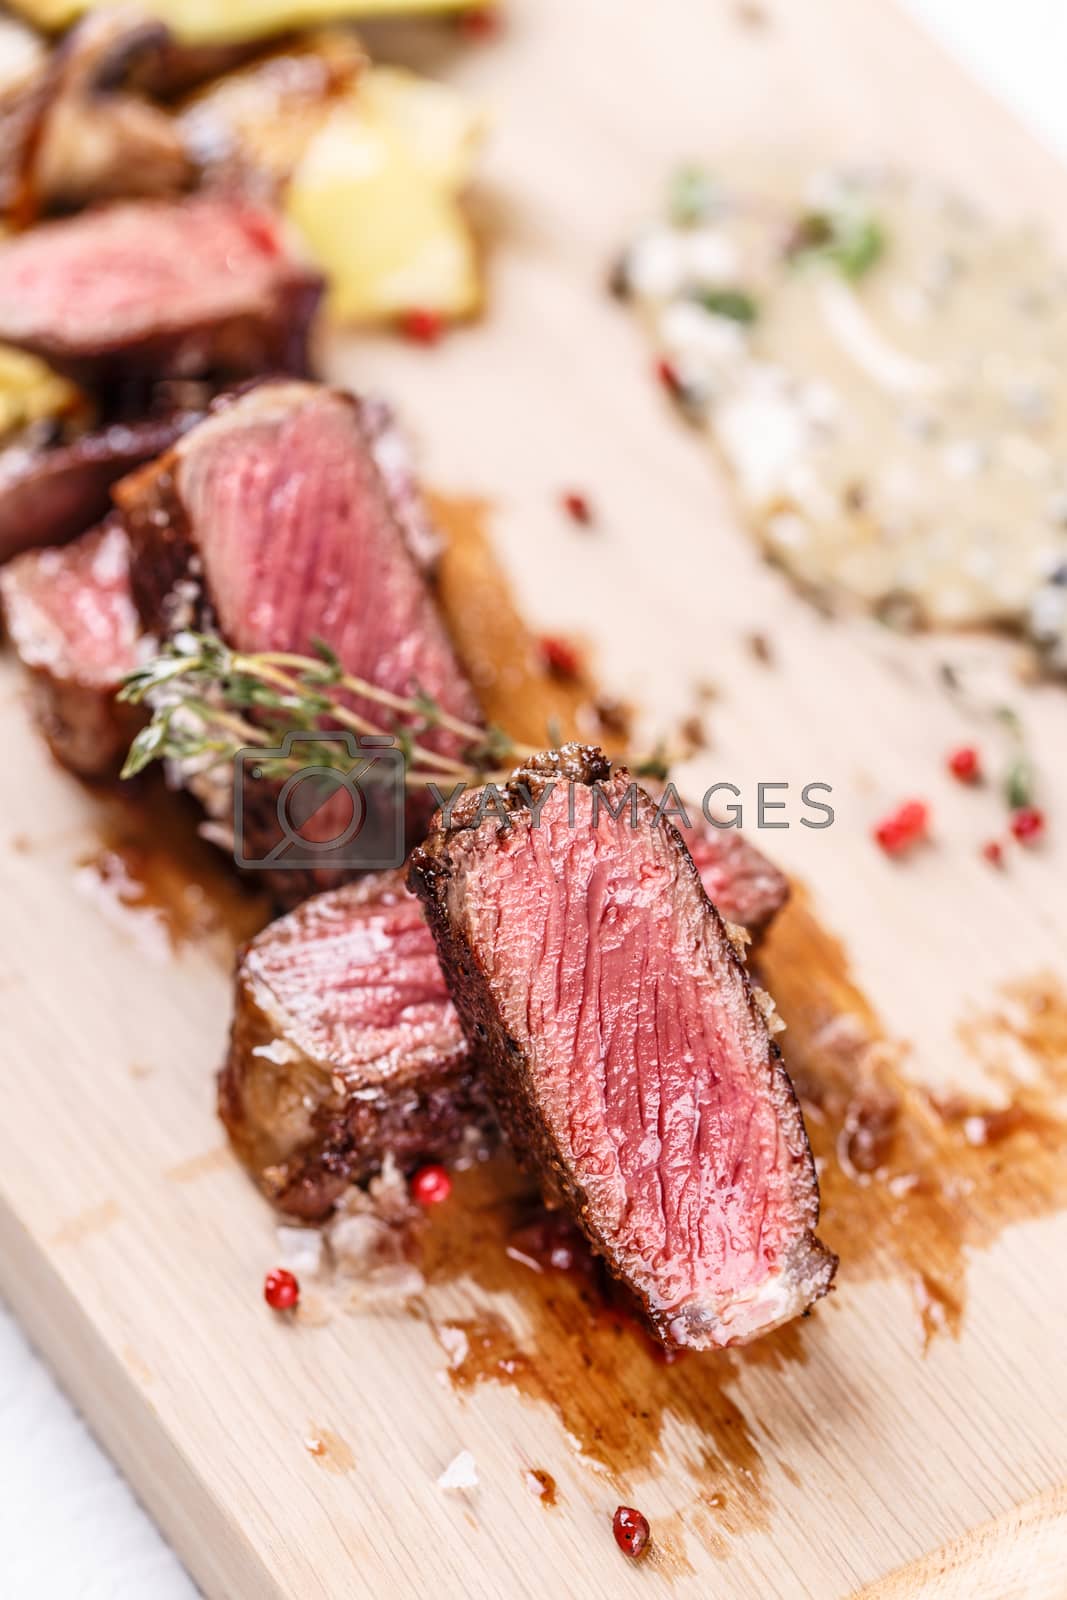 Royalty free image of Juicy steak medium rare beef  by grafvision